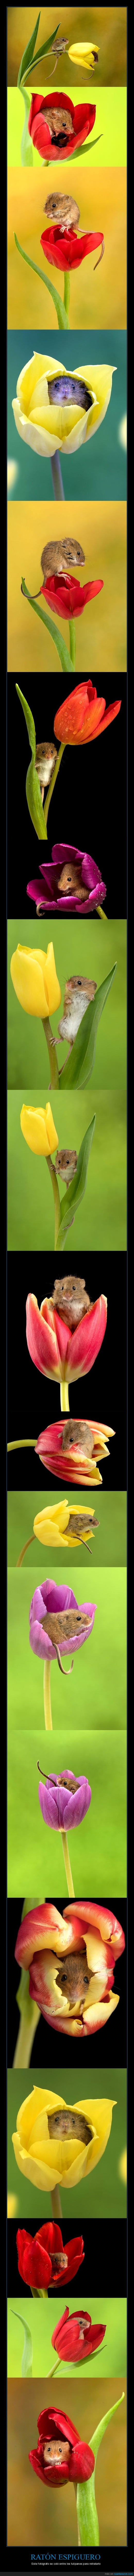 fotografía,ratón espiguero,tulipanes